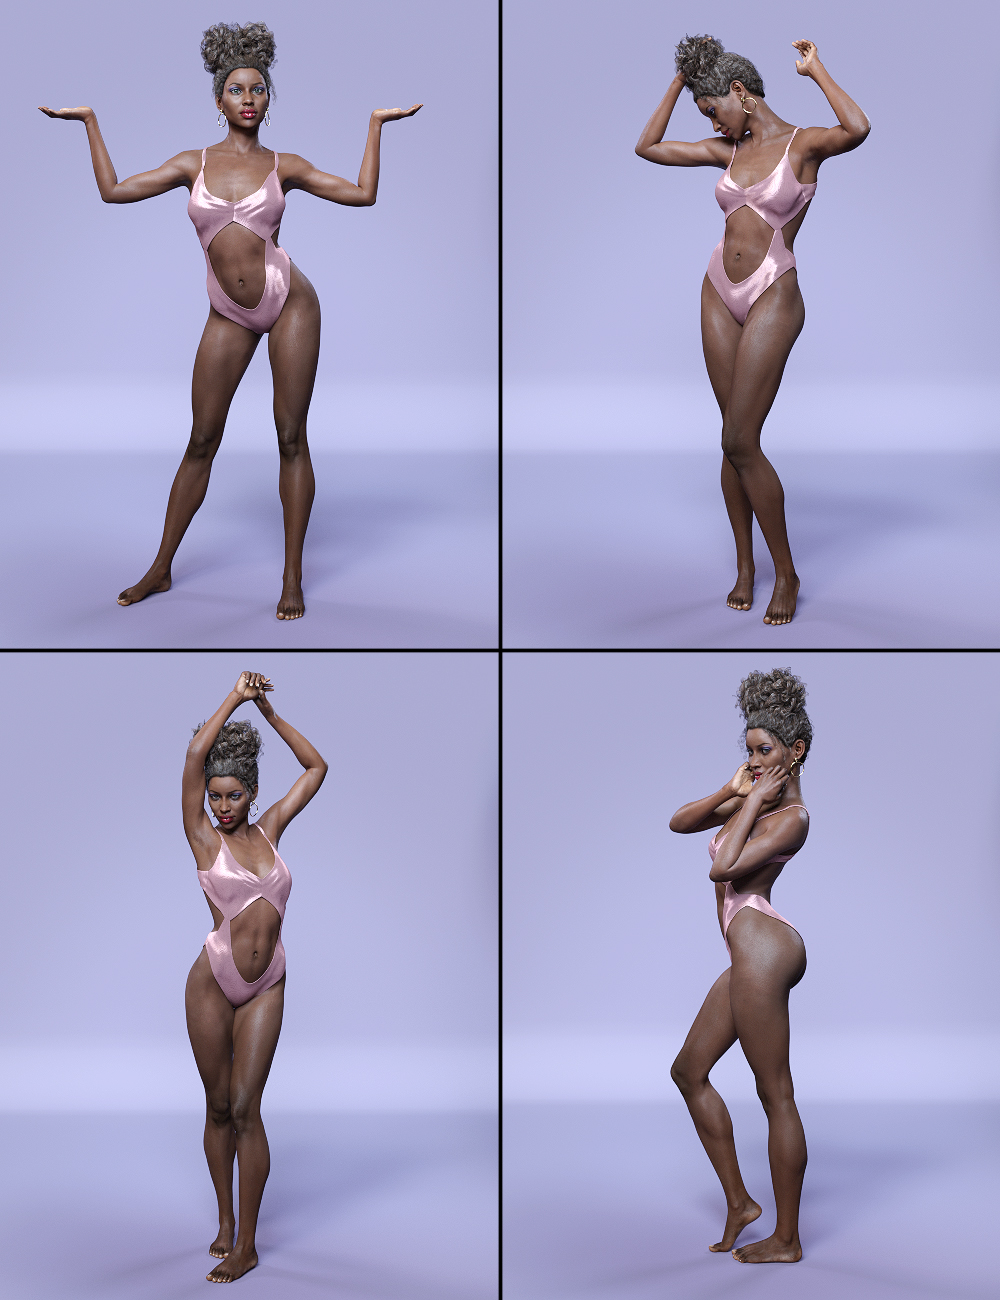 Z Paradise - Poses for Monique 7 & Genesis 3 Female